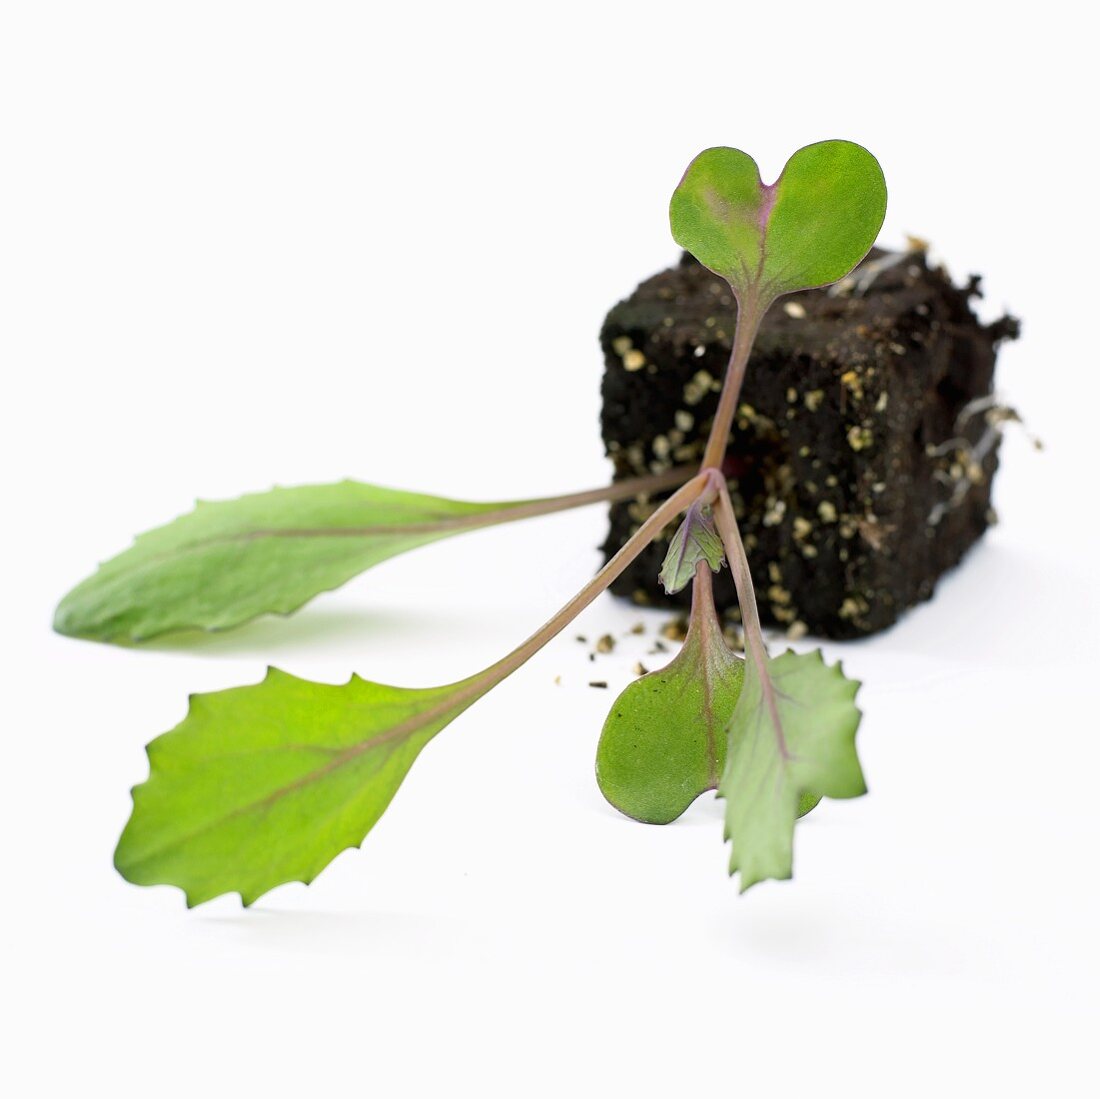 Junge Rotkohlpflanze (Brassica oleracea var. rubra)